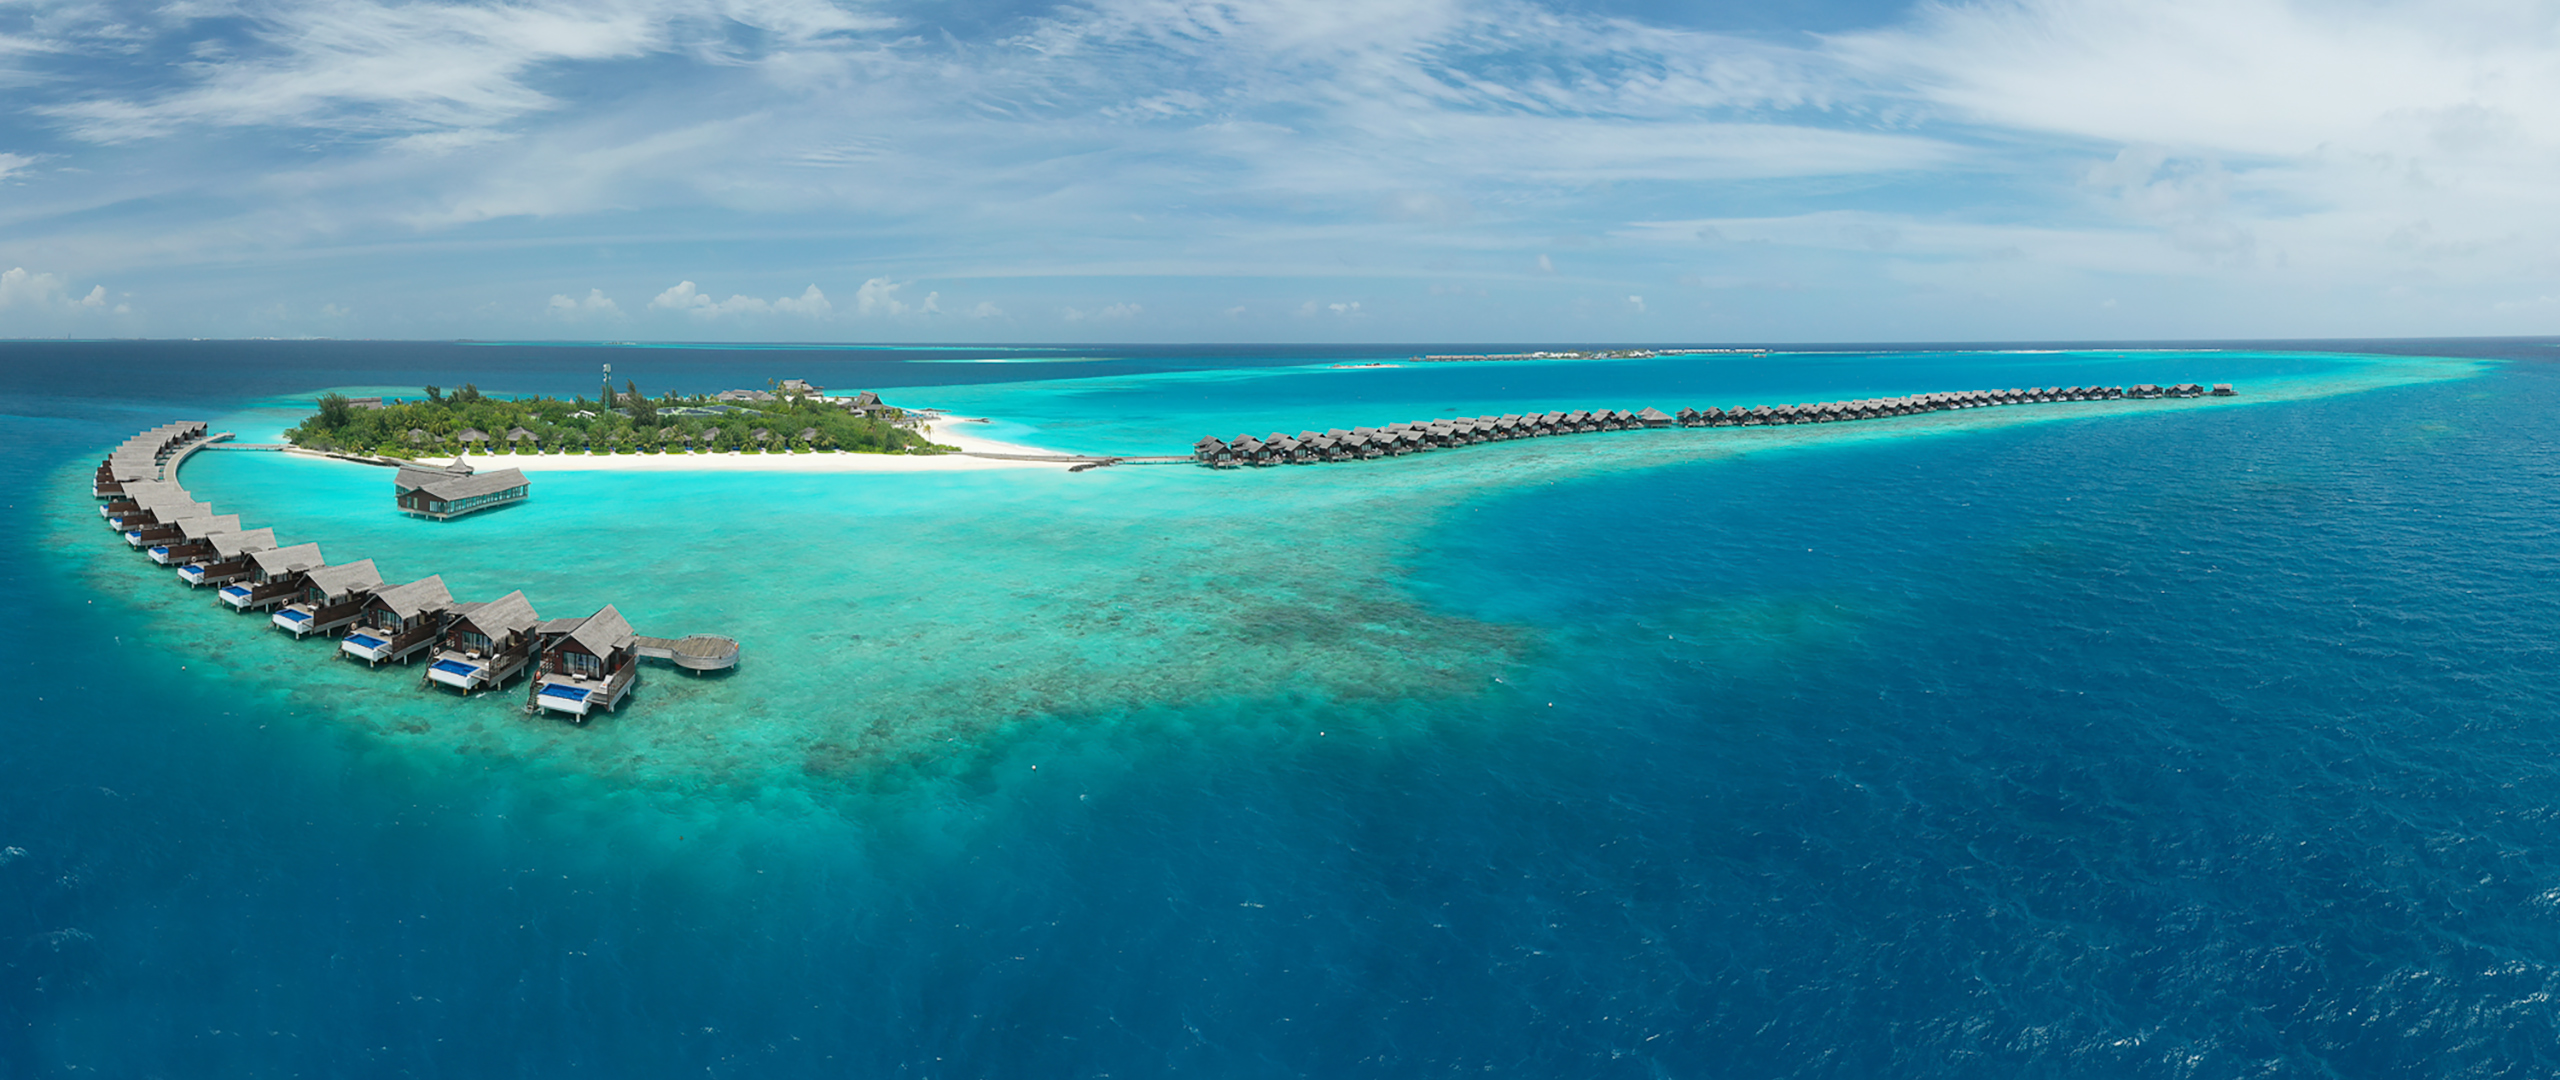 Maldives, Kodhipparu